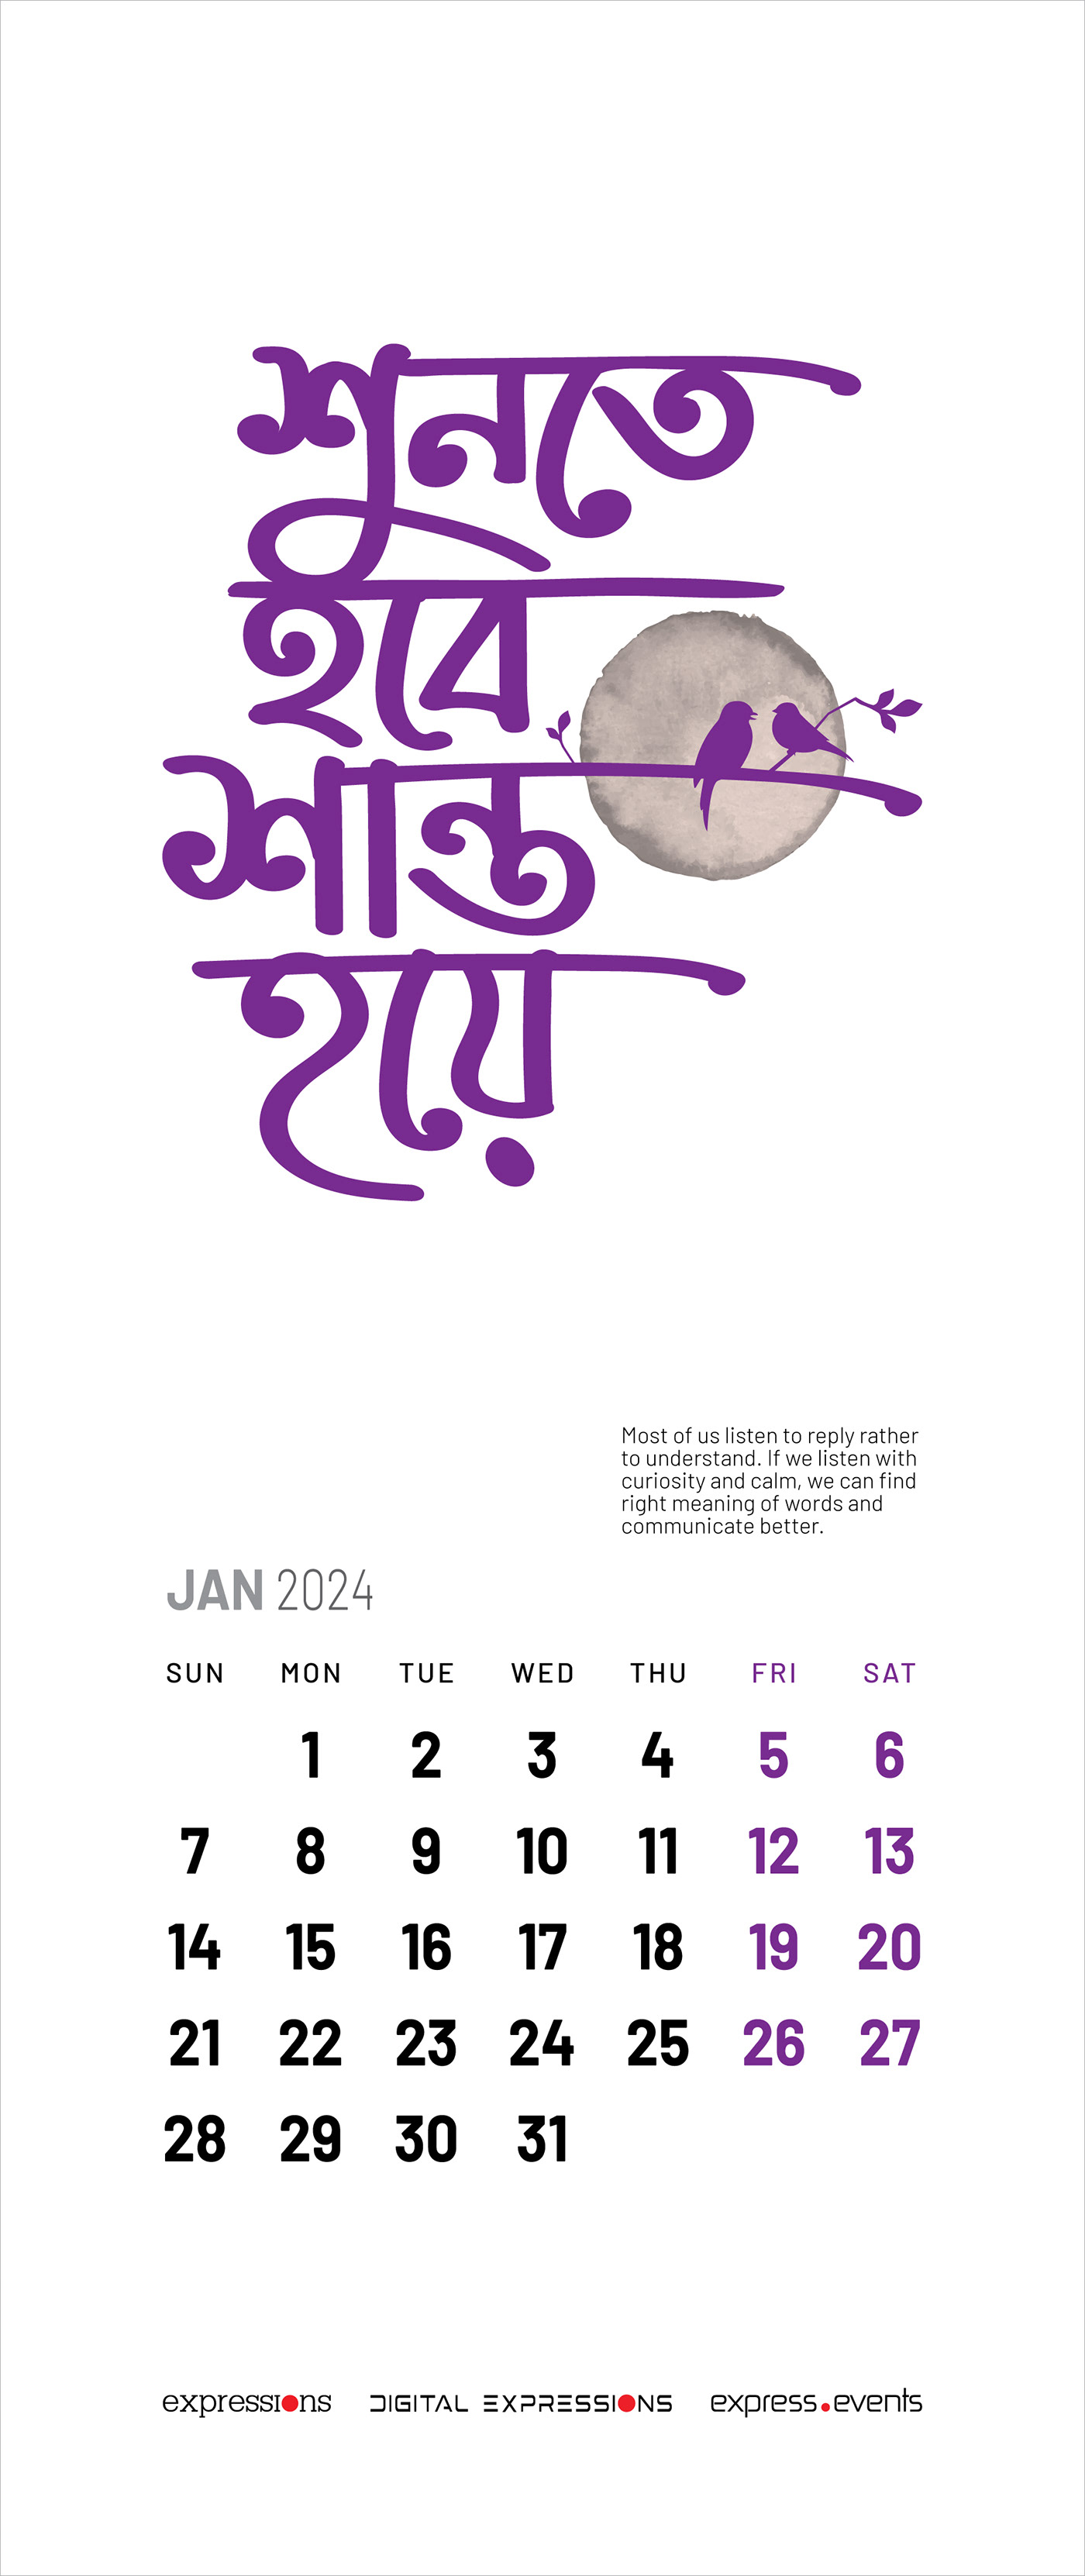 expressions Mushfiq Pavel Mushfiq calendar 2024 calendar Creative Direction  copywriting  Advertising 